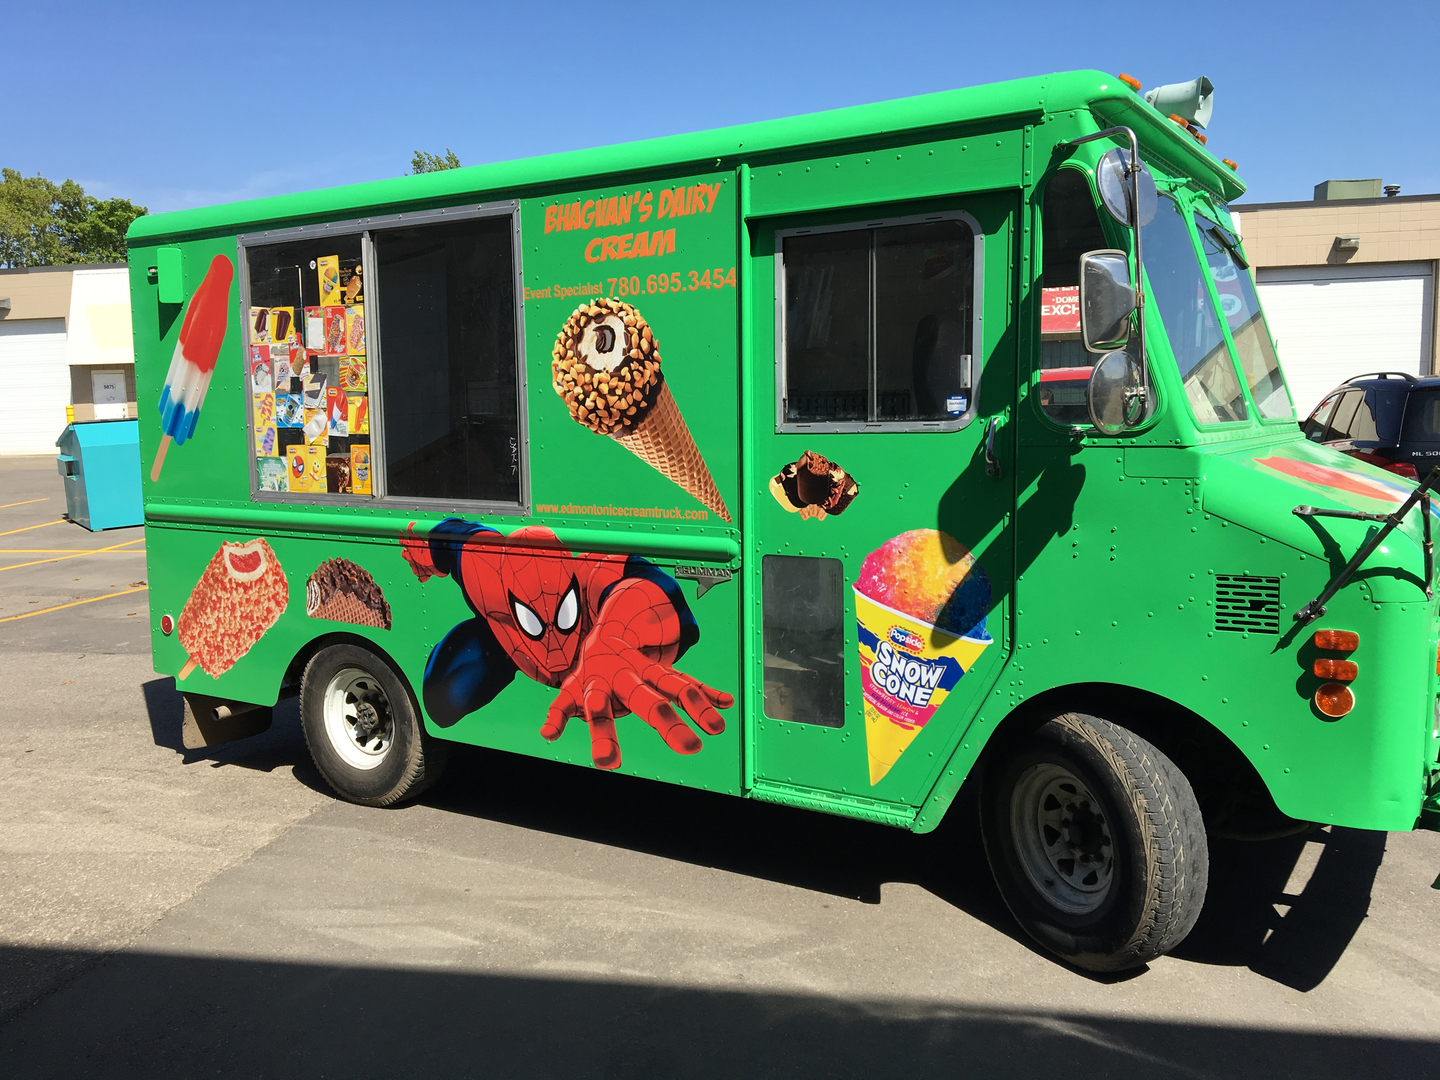 Ice cream truck in edmonton.